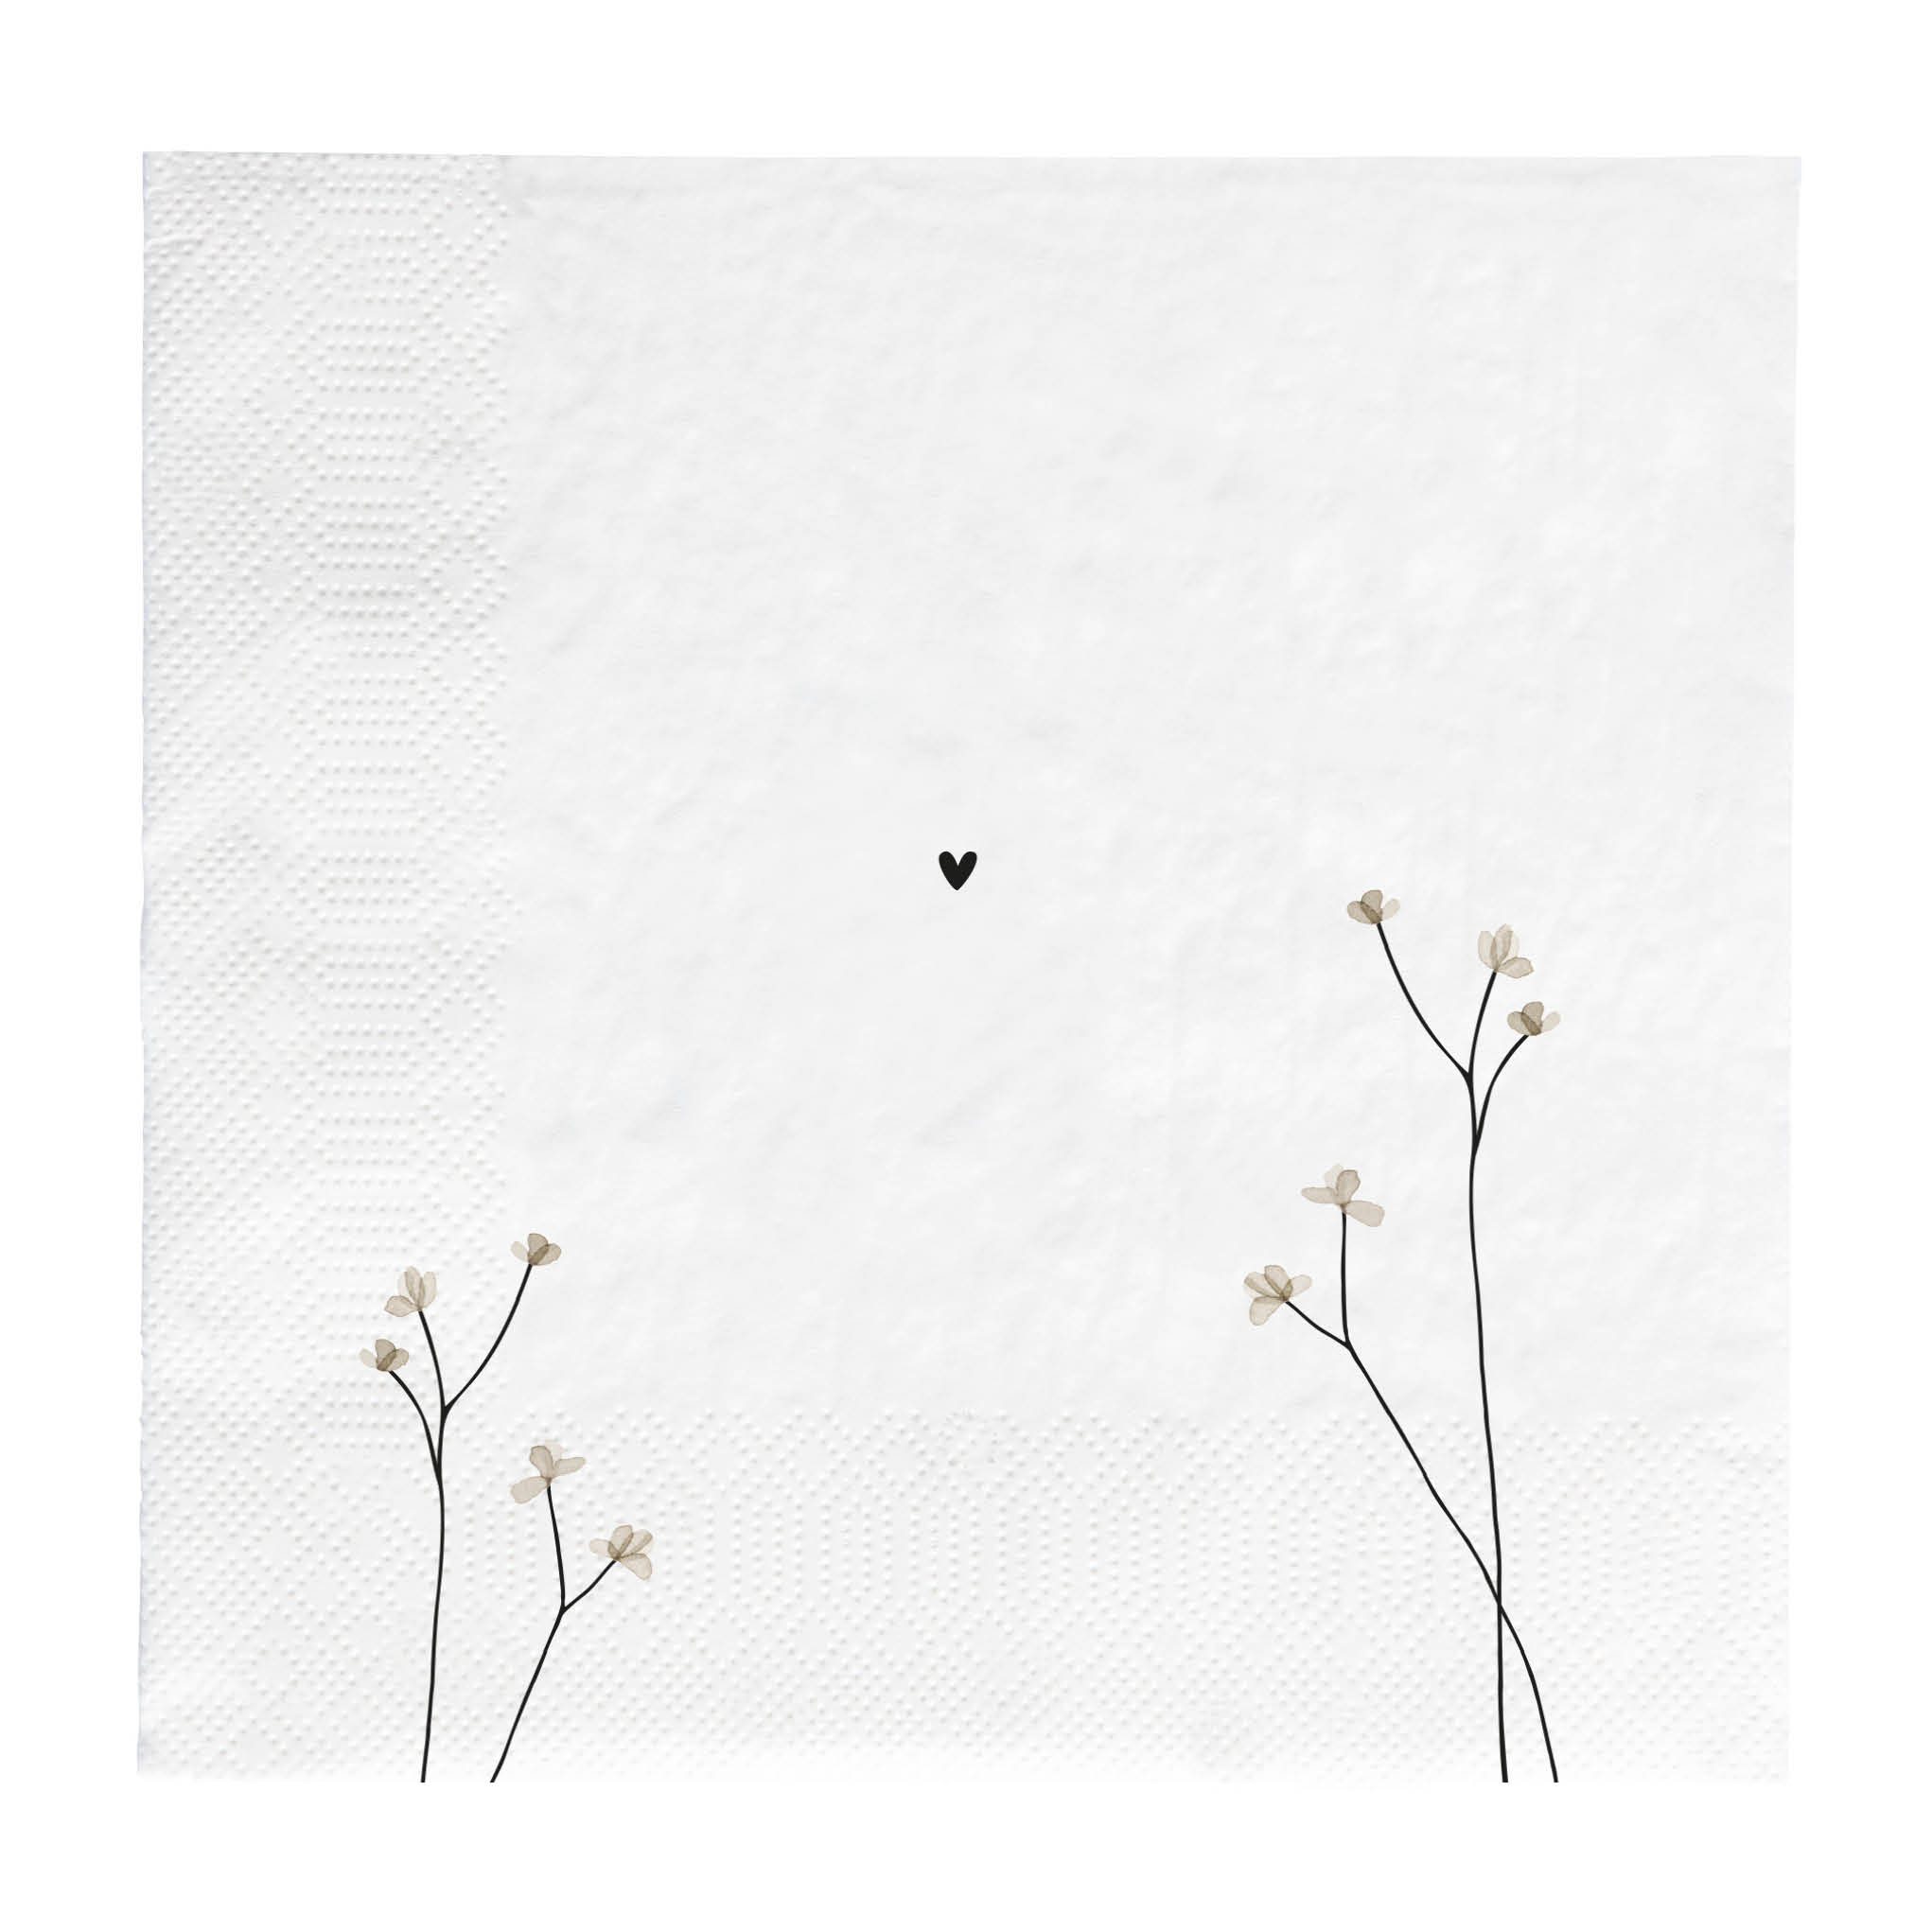 Papierservietten White/Hello Beautiful